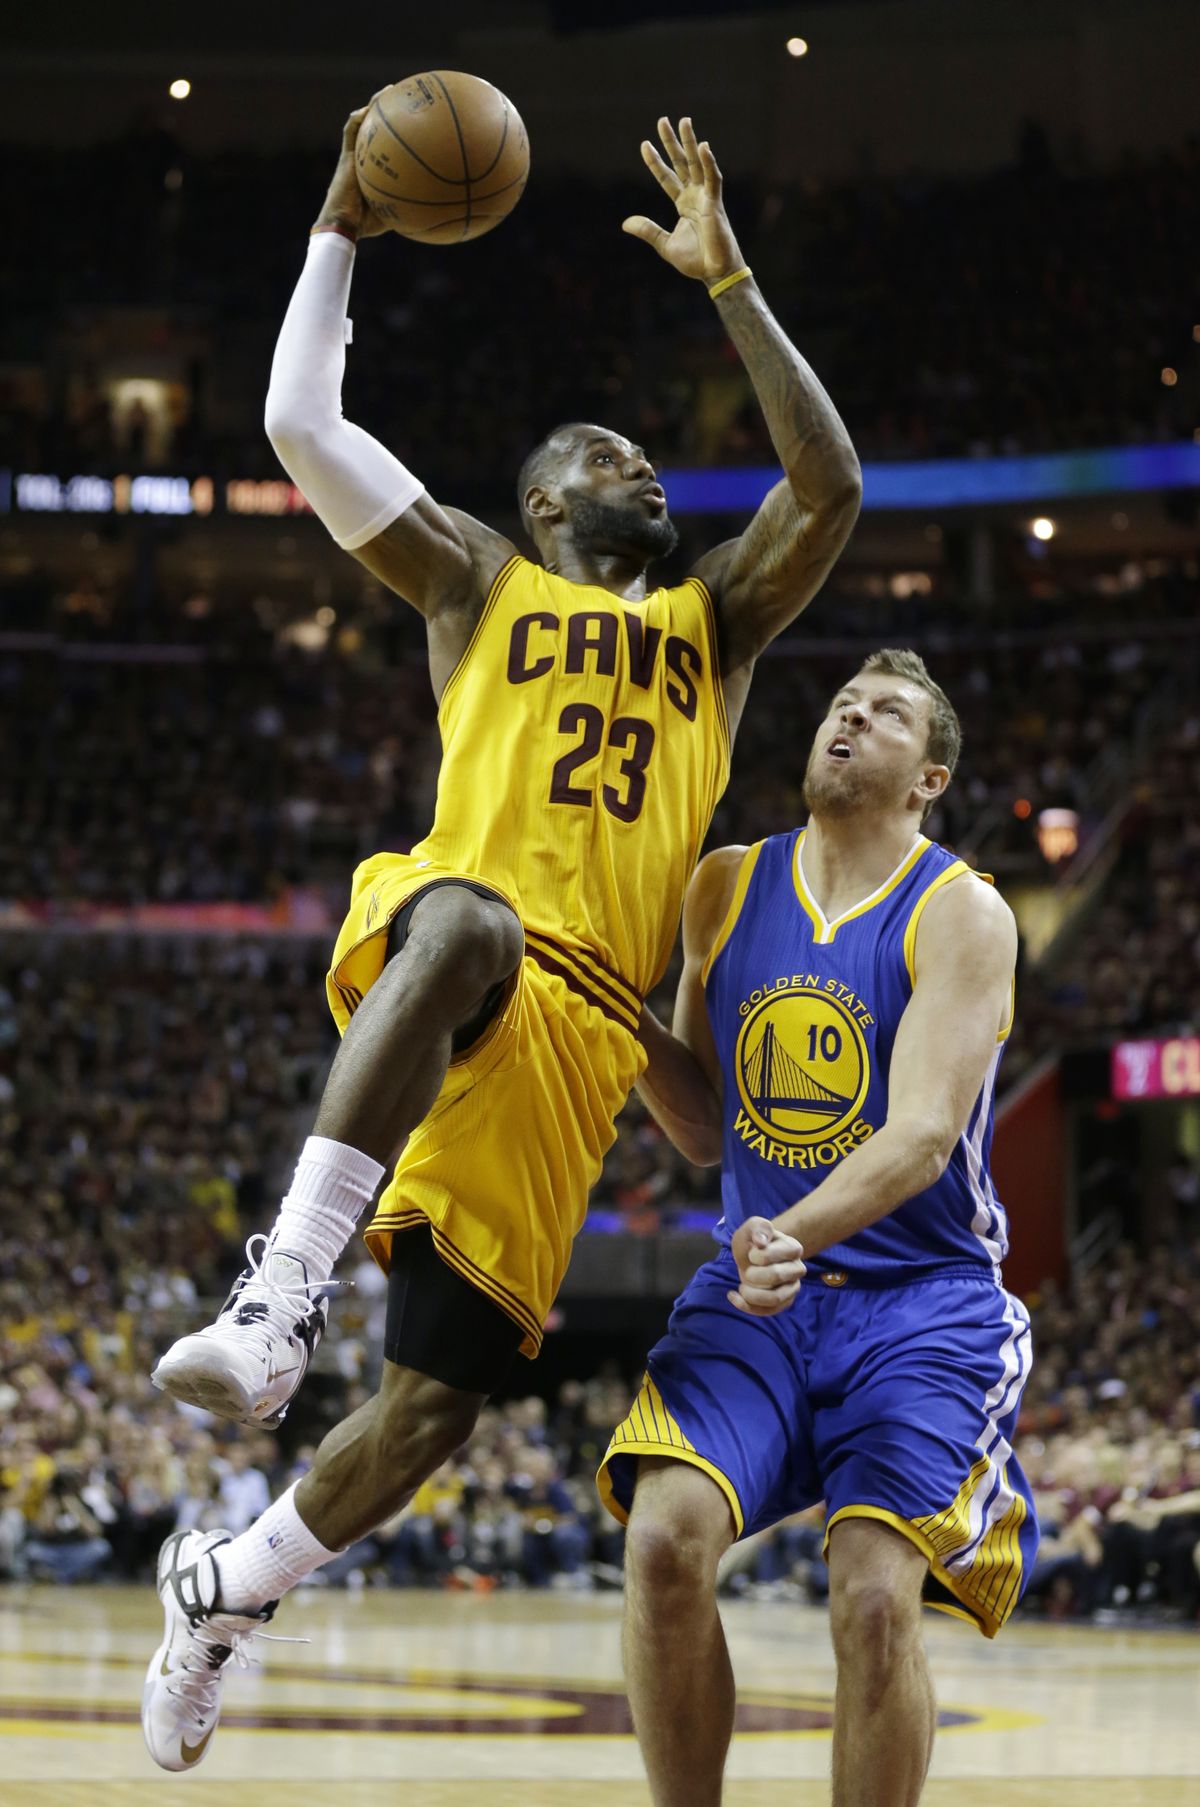 Cavs’ LeBron James scored 40 points. (Associated Press)